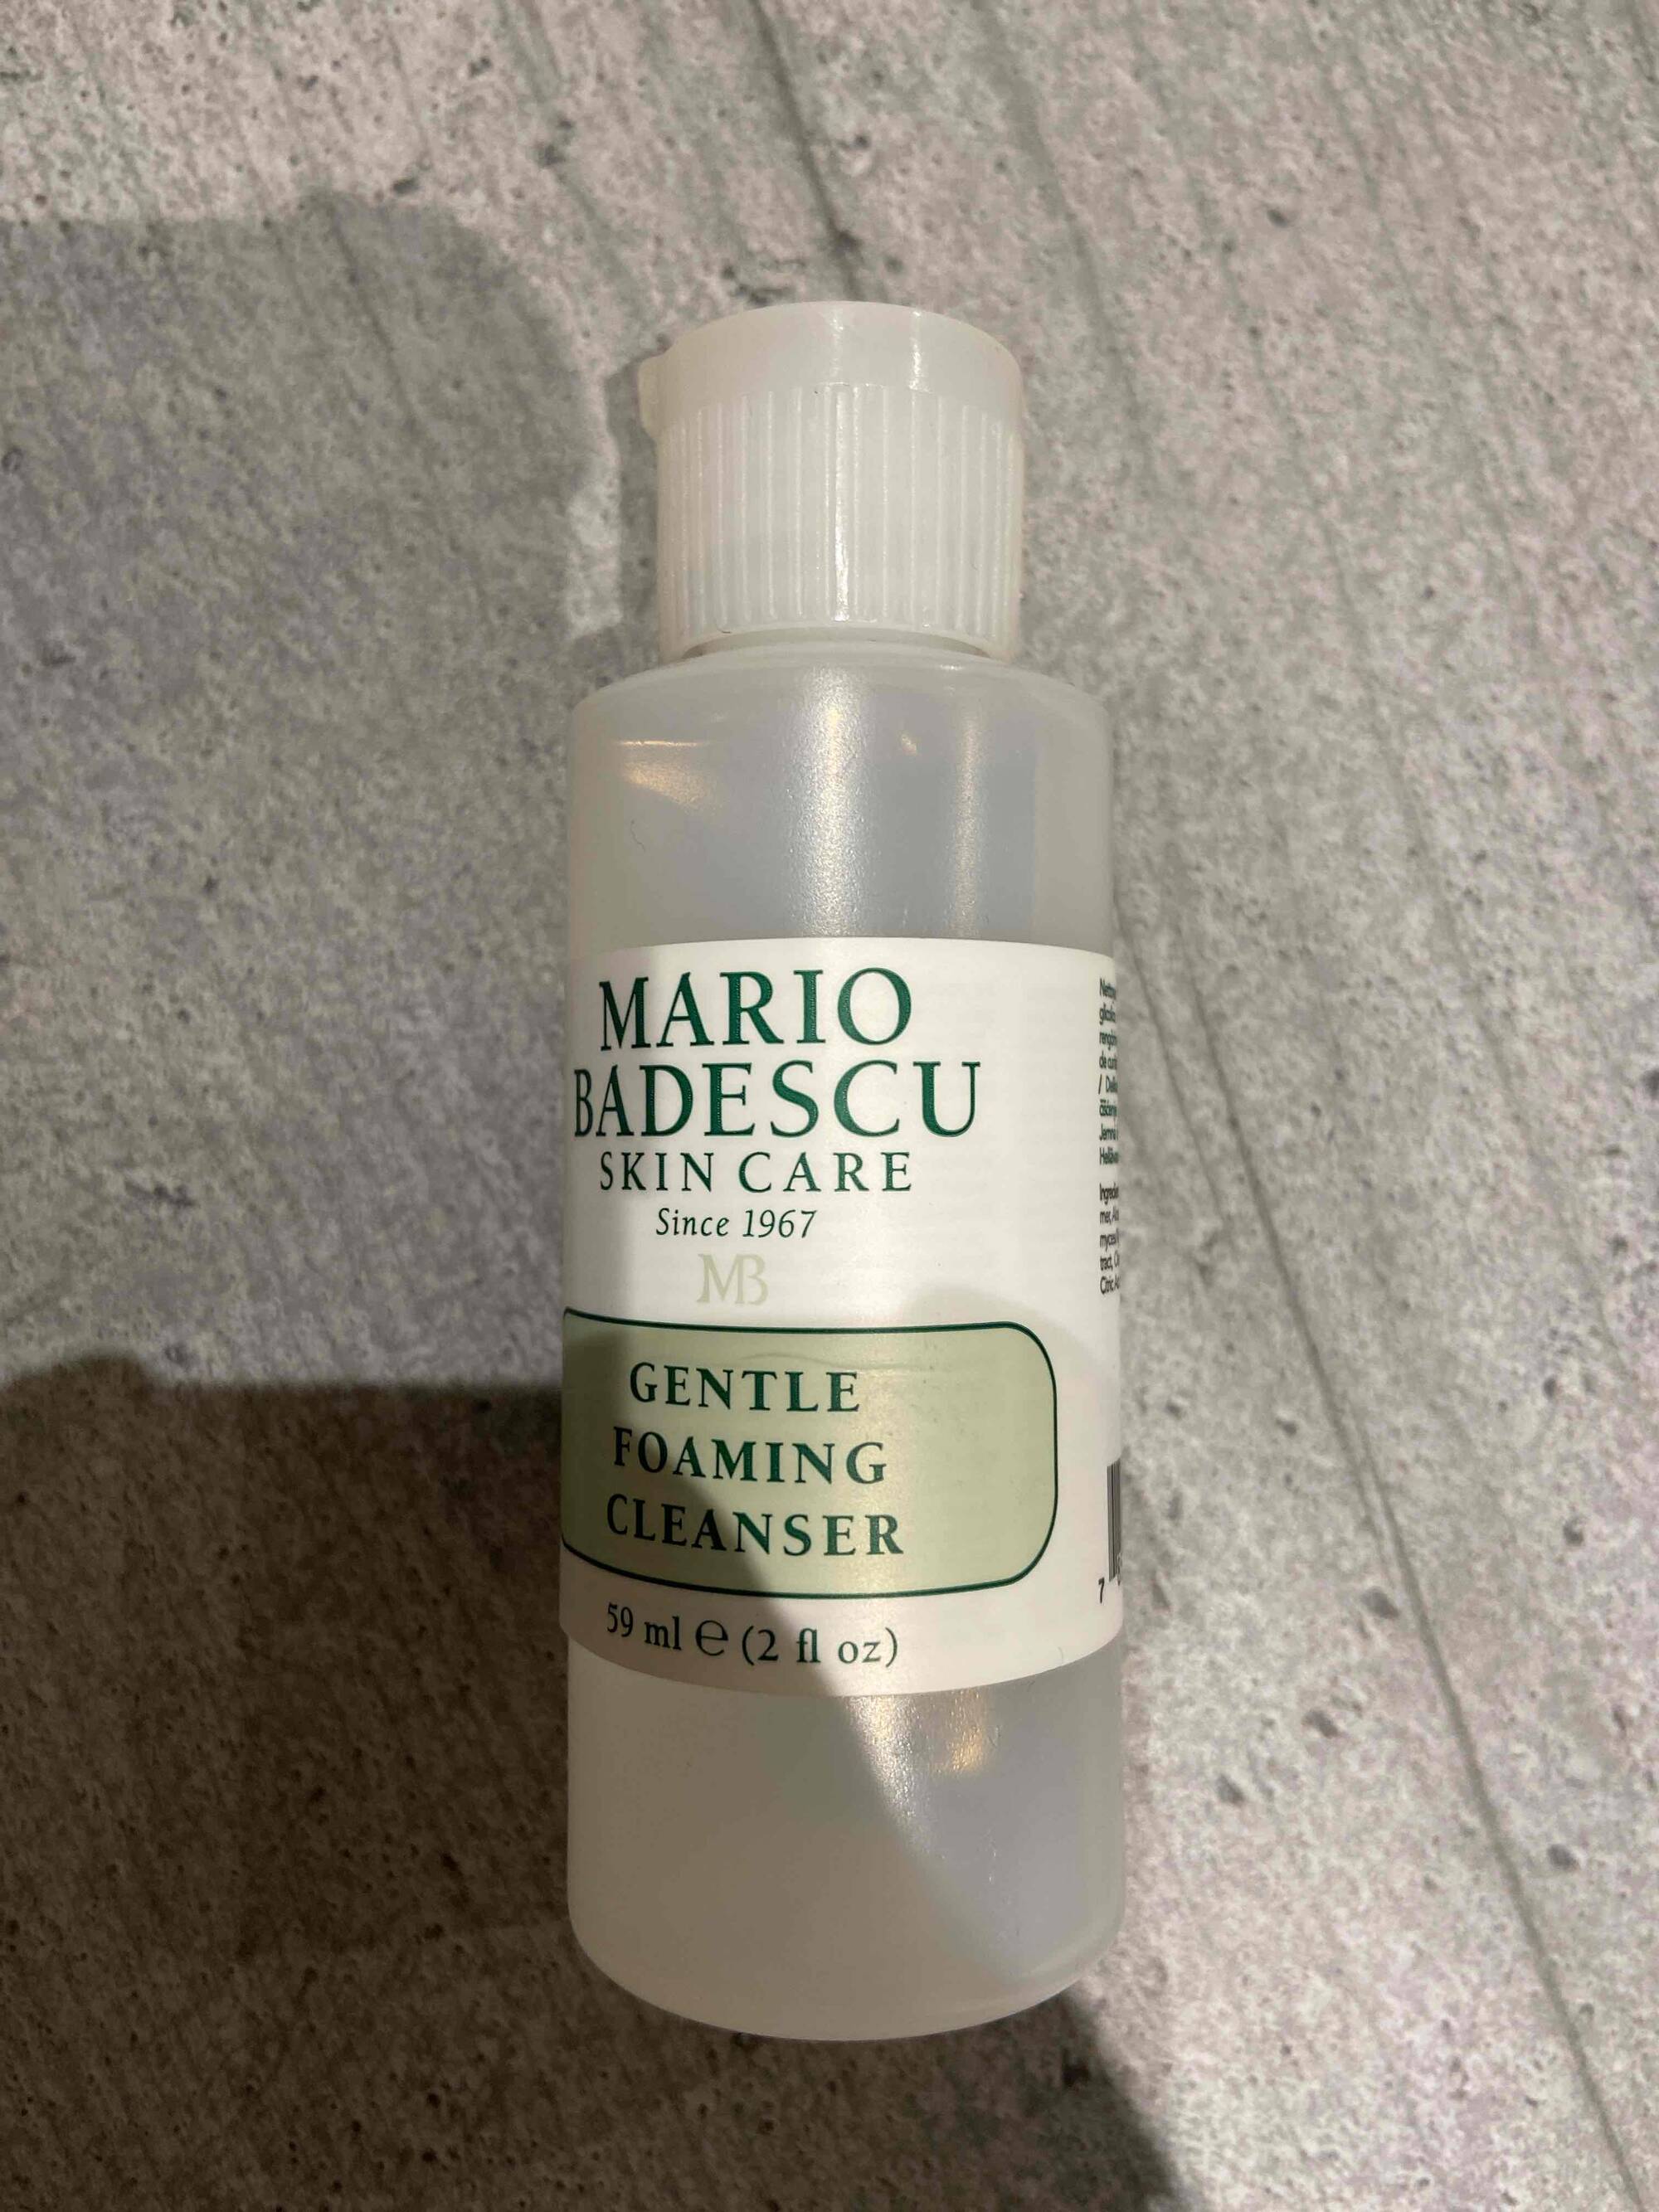 MARIO BADESCU - Gentle faoming cleanser